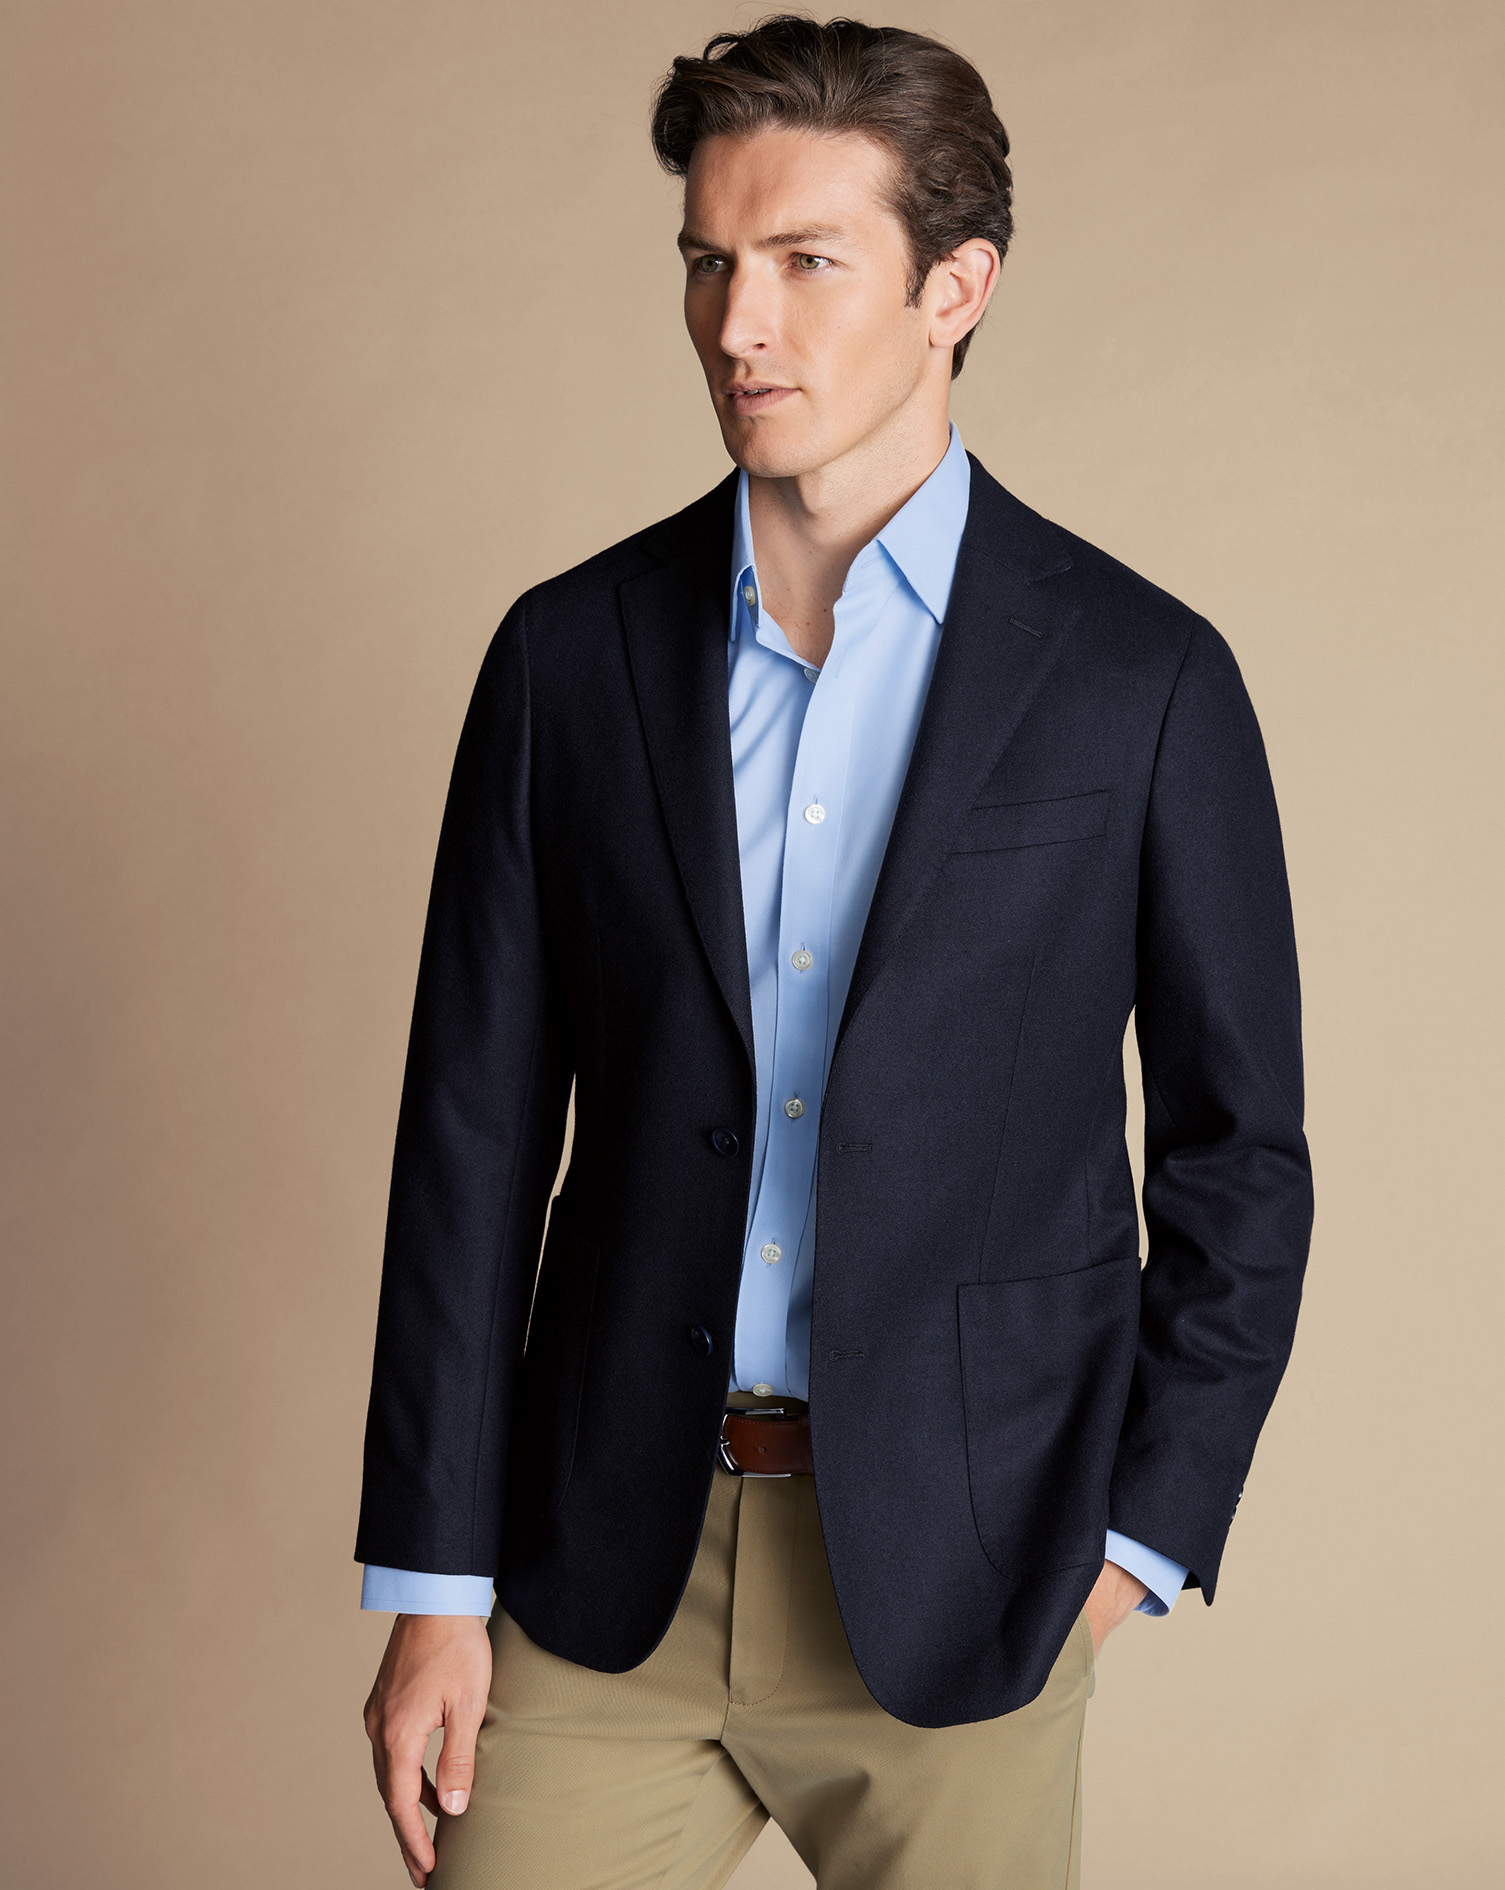 Men's Charles Tyrwhitt Unstructured Twill na Jacket - Navy Blue Size 42R Wool
